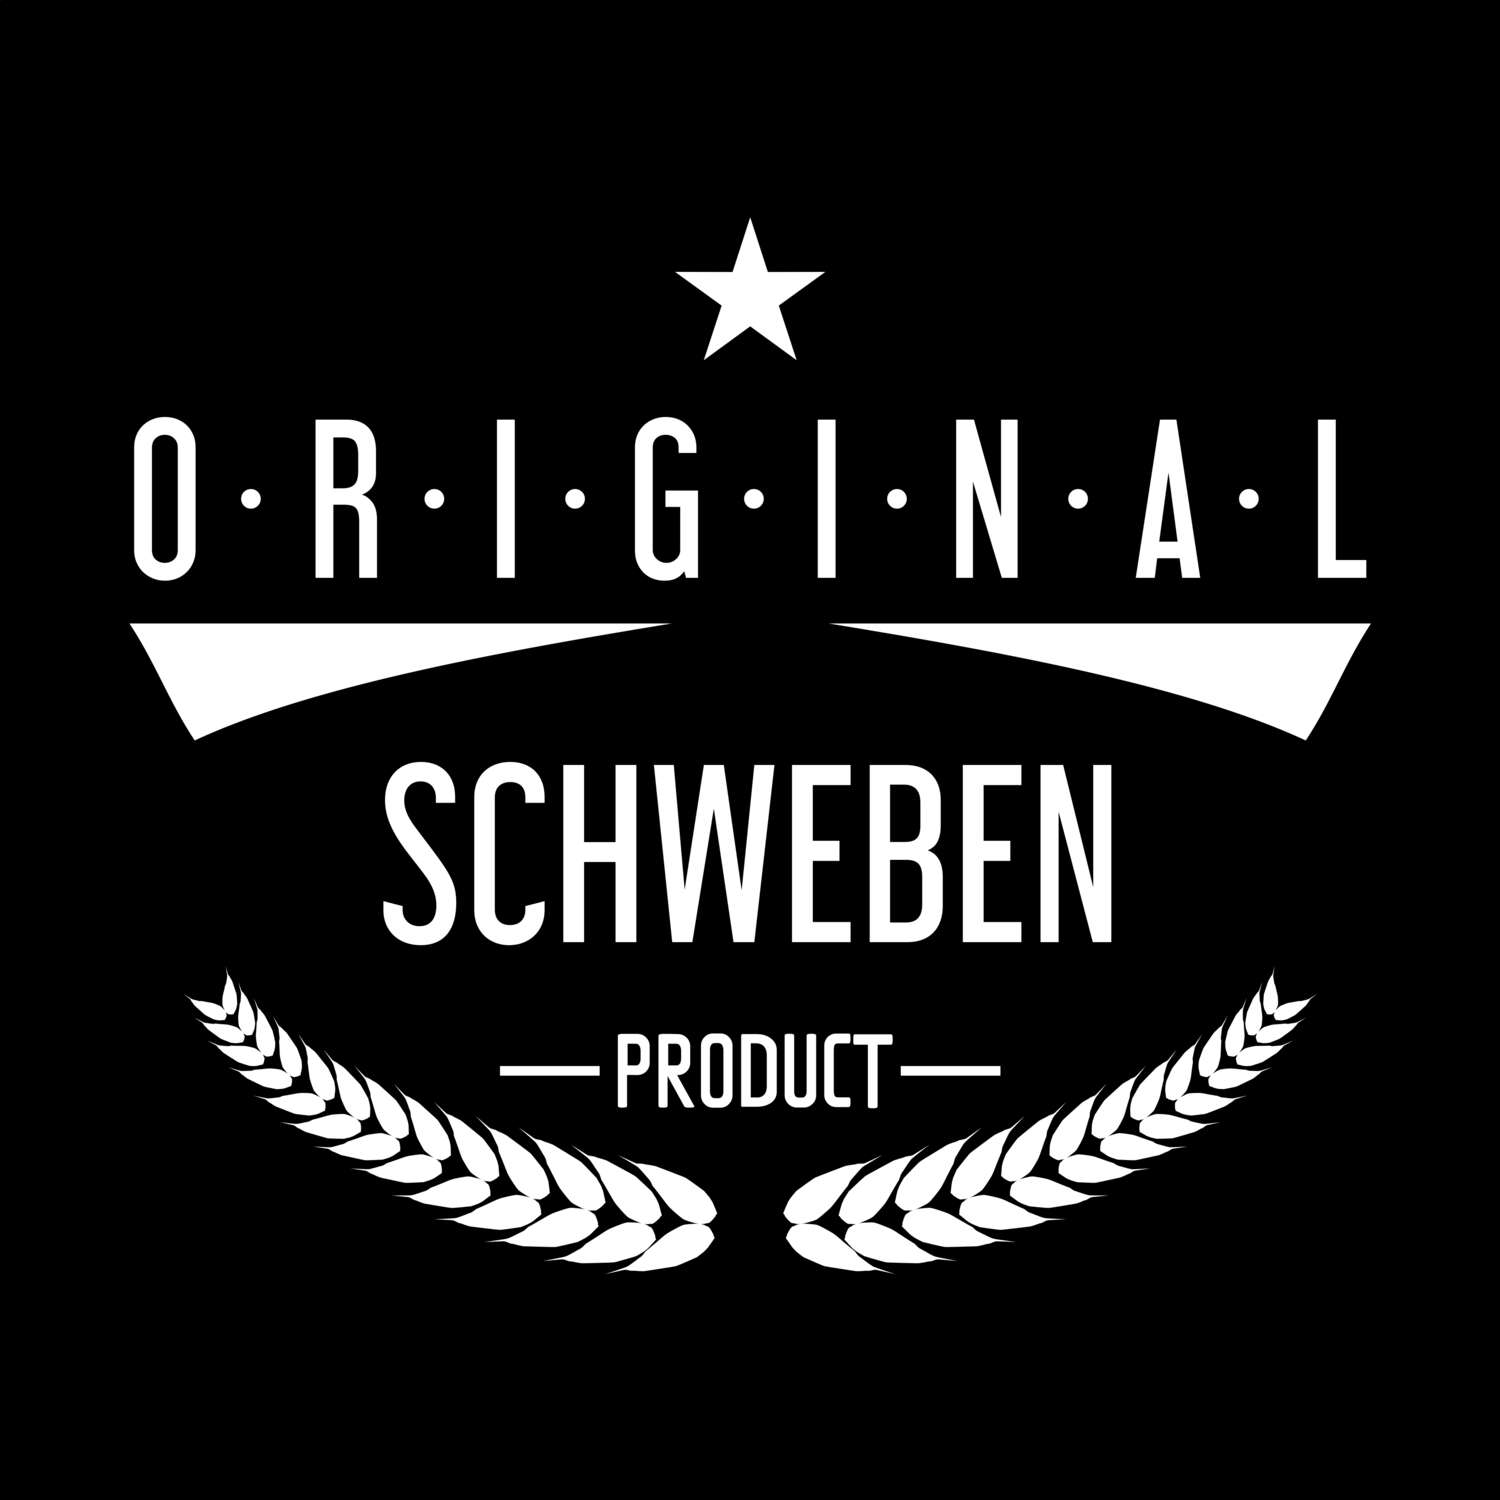 Schweben T-Shirt »Original Product«